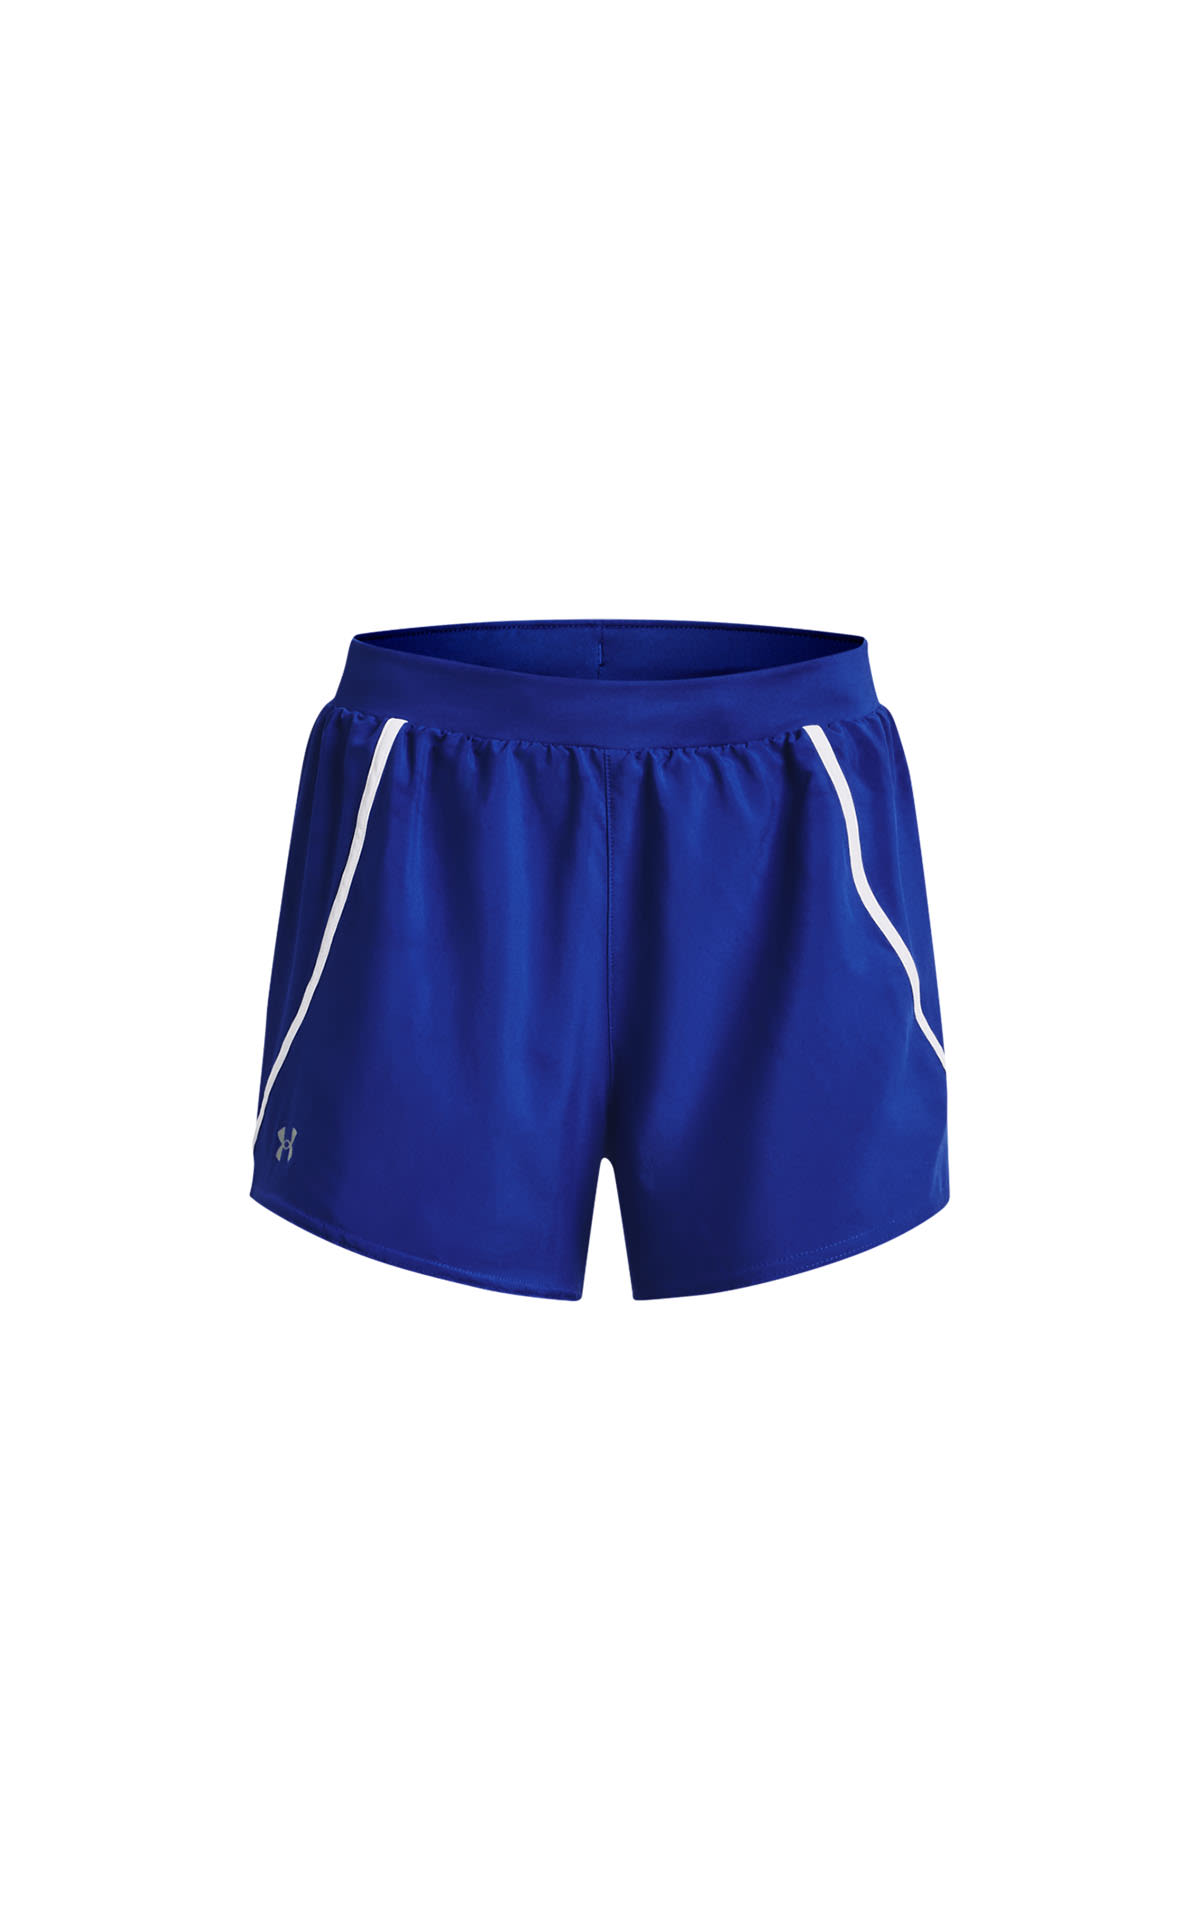 Blue Sport Shorts Under Armour